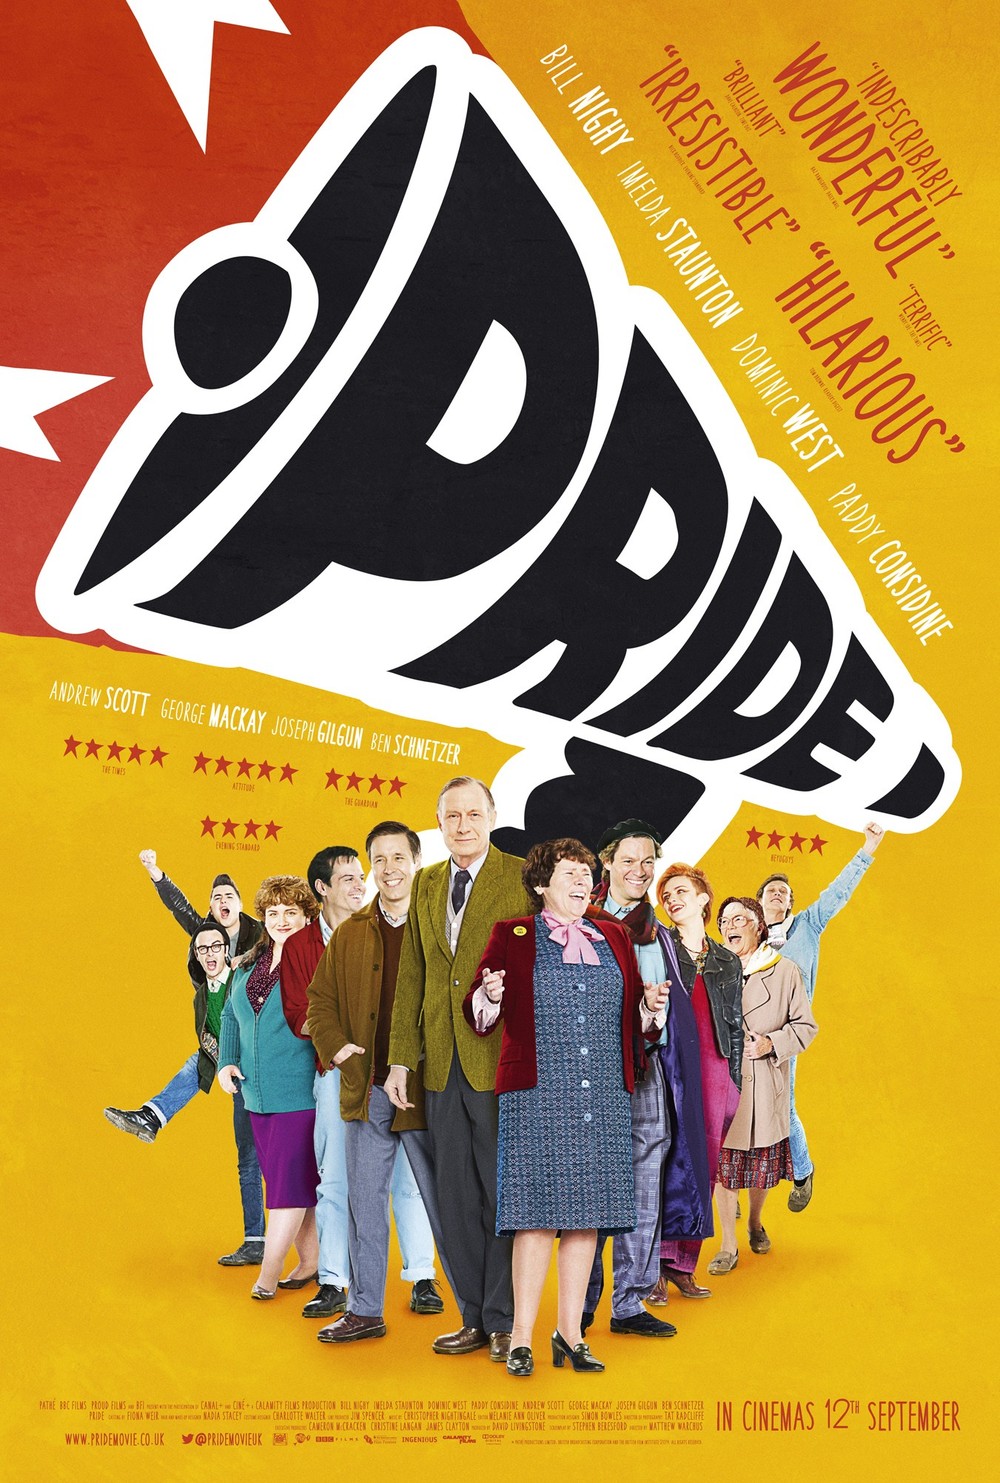 Pride DVD Release Date | Redbox, Netflix, iTunes, Amazon